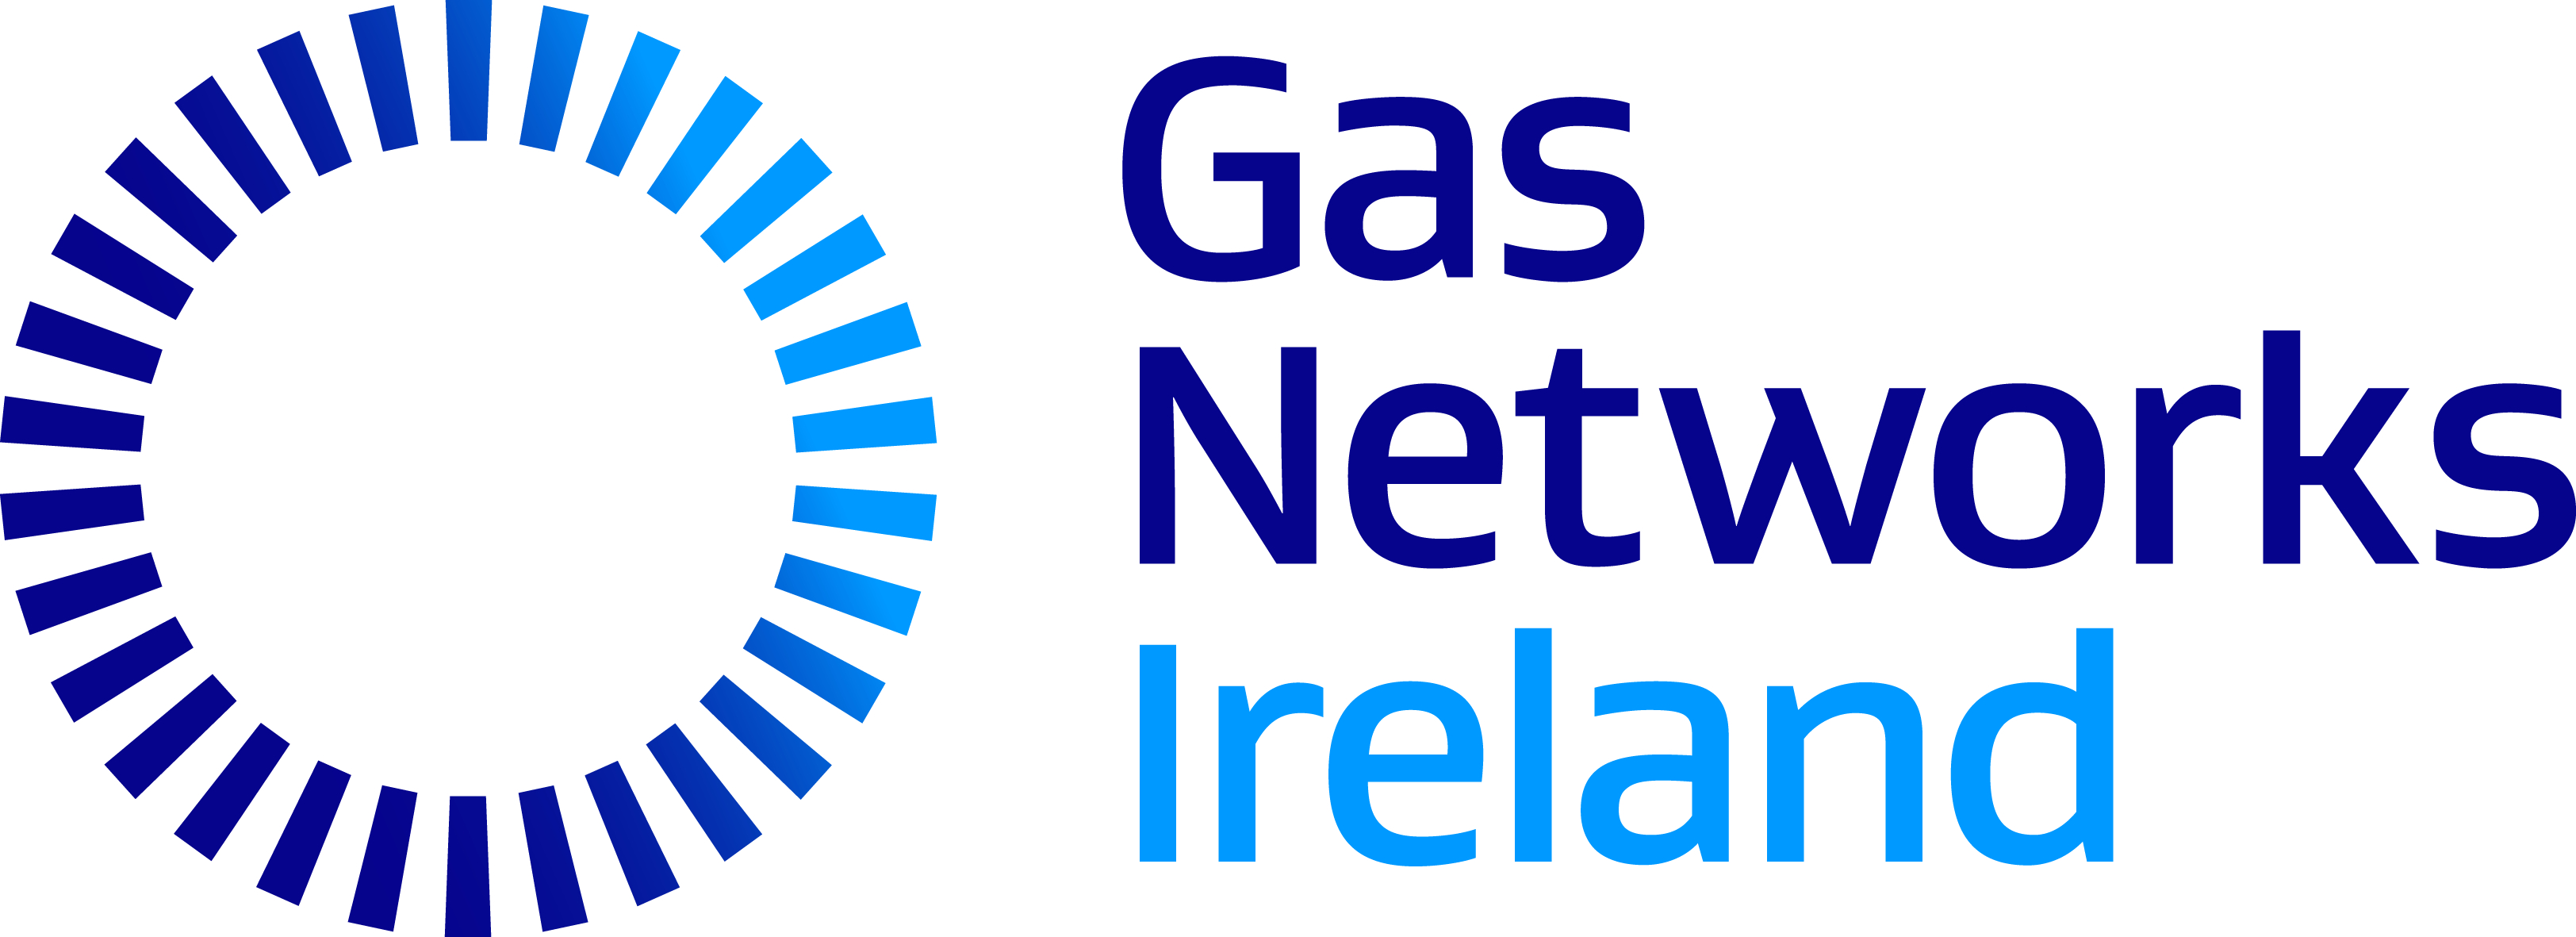 Gas Networld Ireland logo